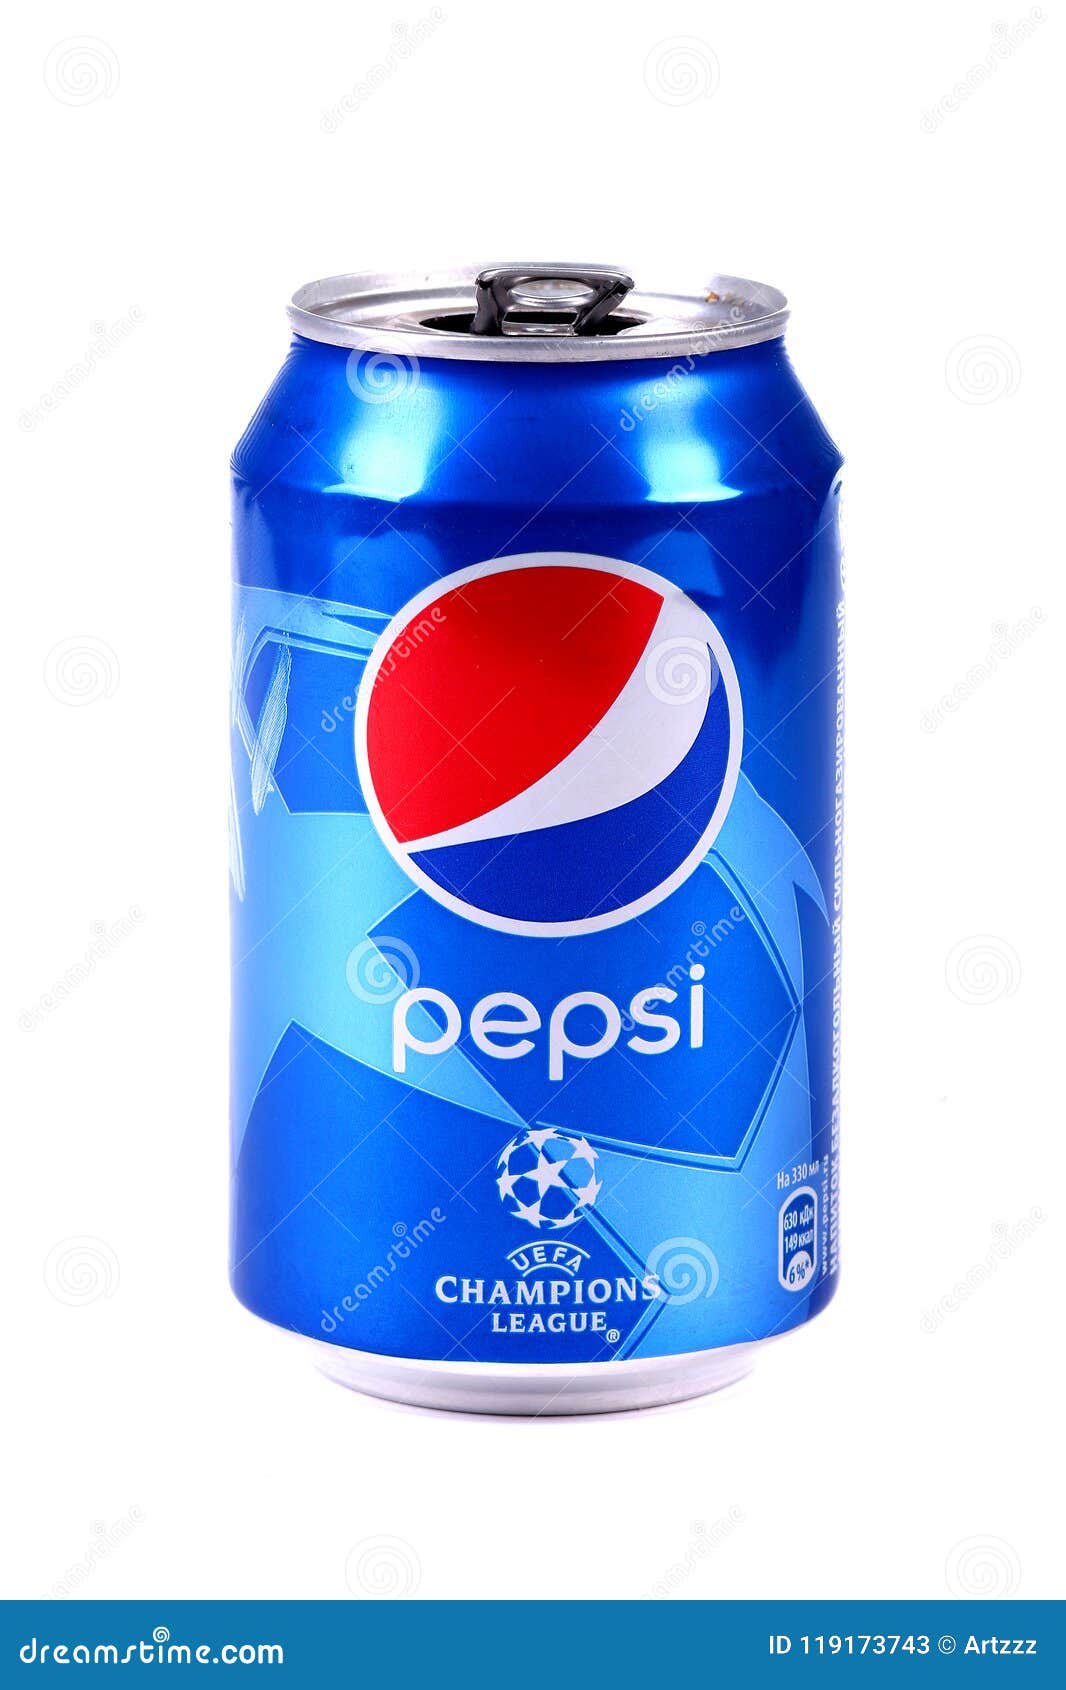 Pepsi UEFA Champions League Edition Editorial Stock Photo - Image of ...